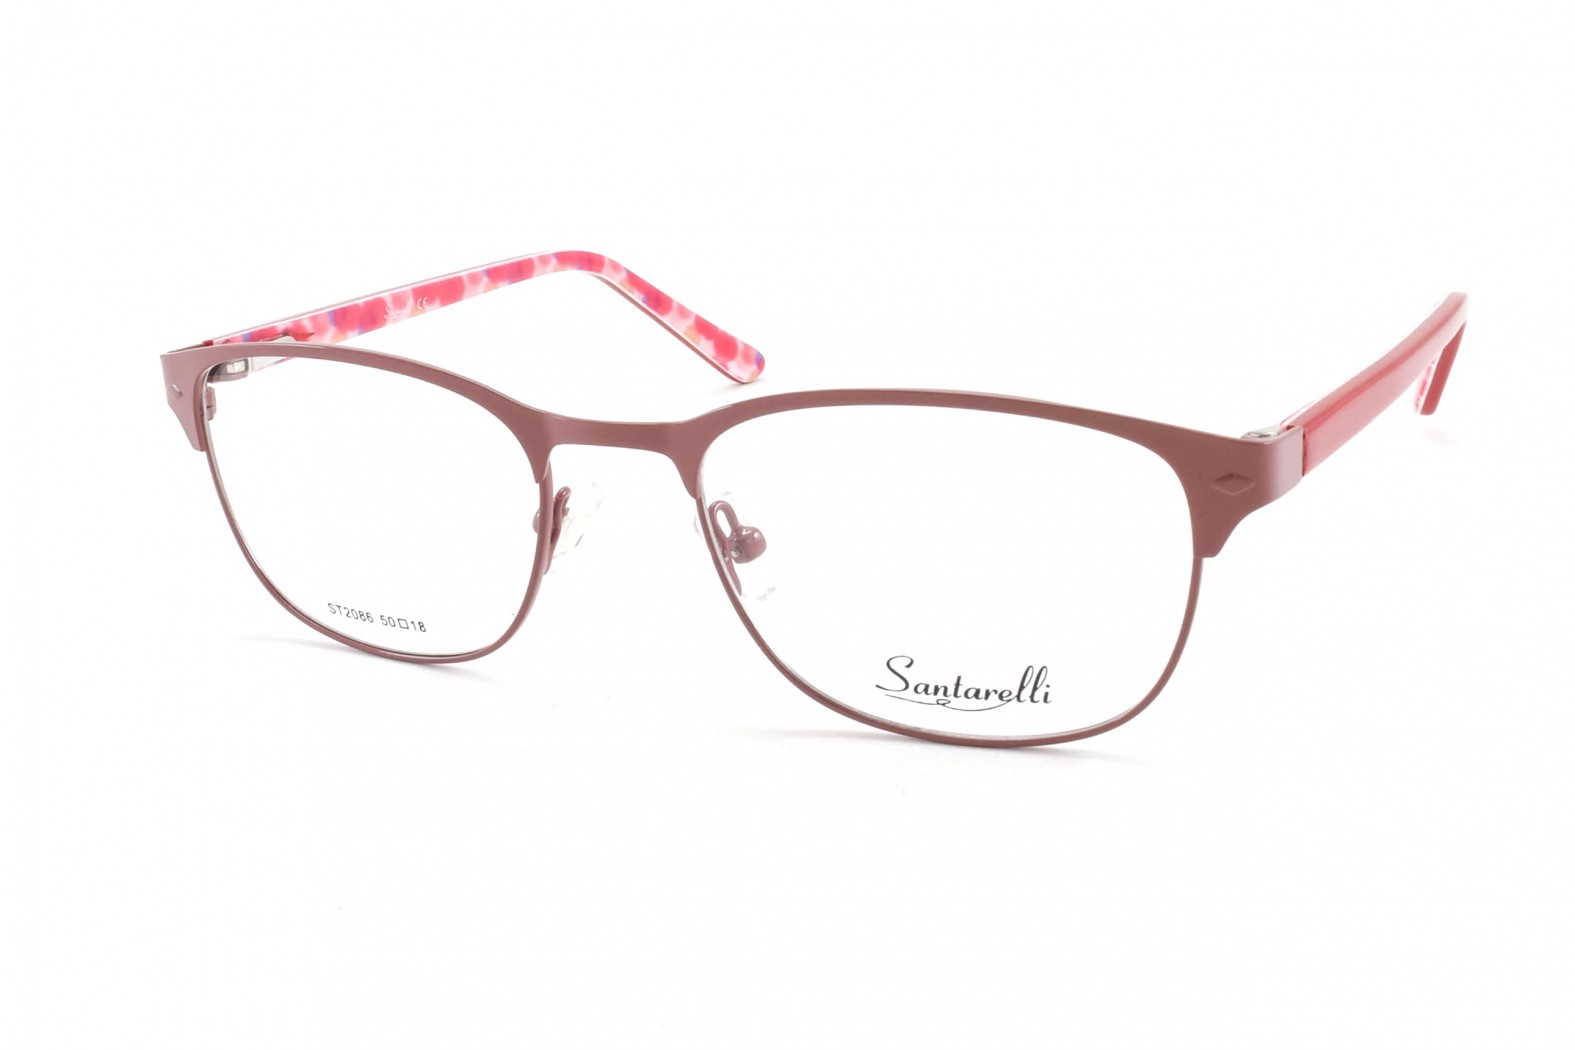 Очки Santarelli. Оправа Santarelli 1436. Santarelli 2181-6 очки. Оправа Santarelli MG 3728 с1.